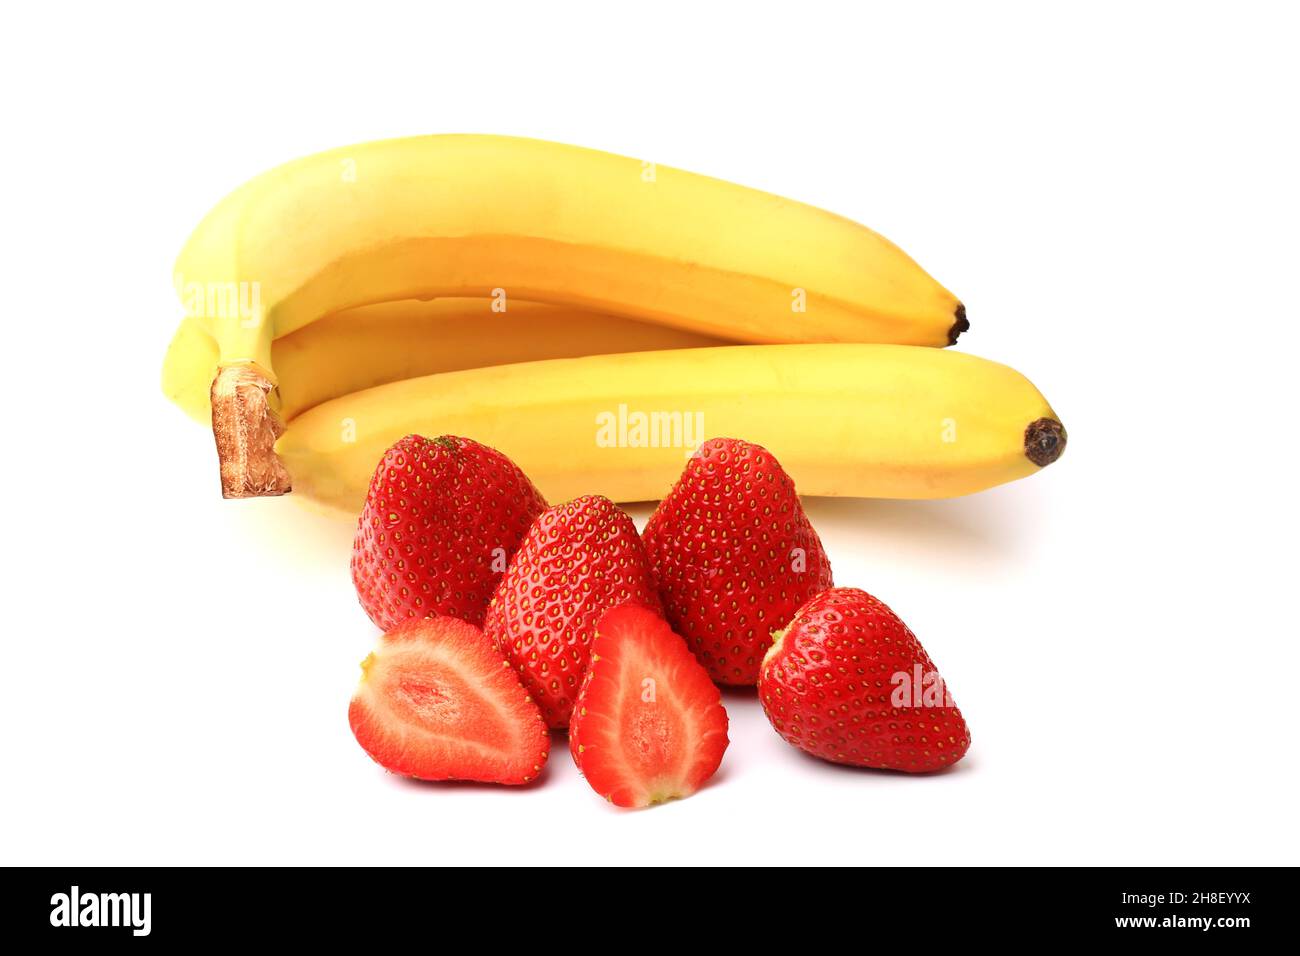 banana and strawberry isolated on white background Stock Photo